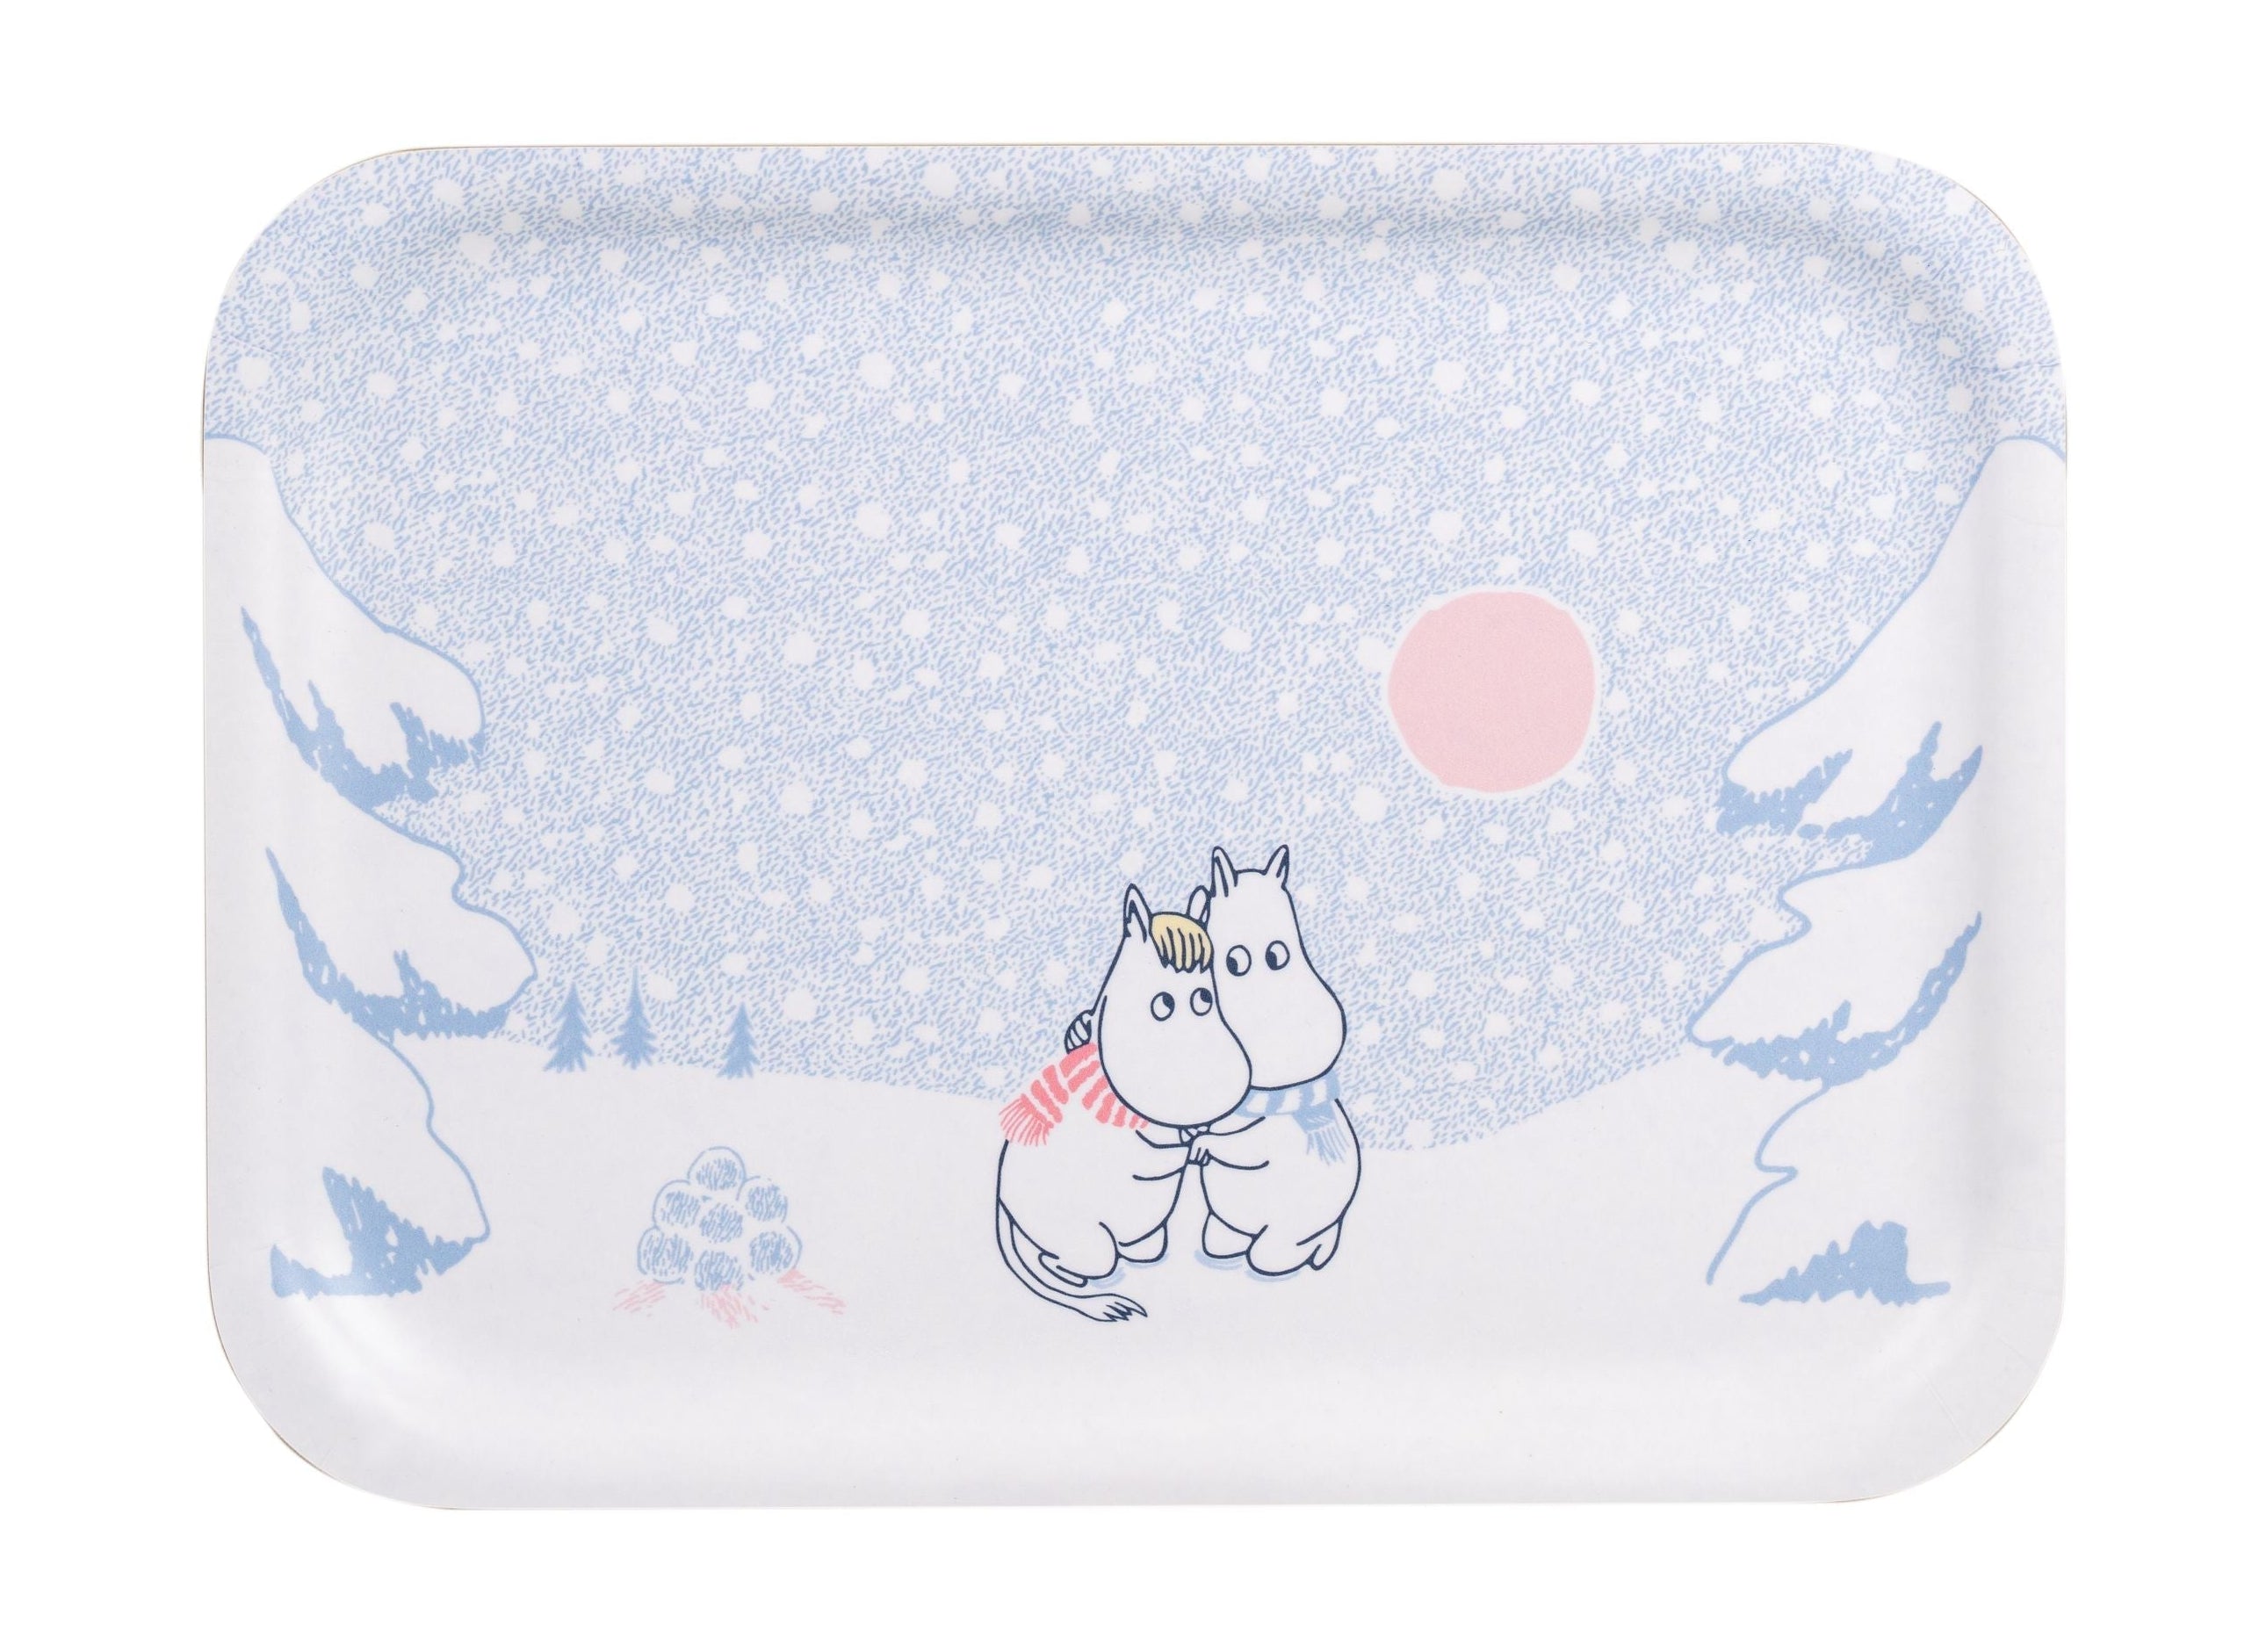 Muurla Moomin Tray laat het sneeuwen